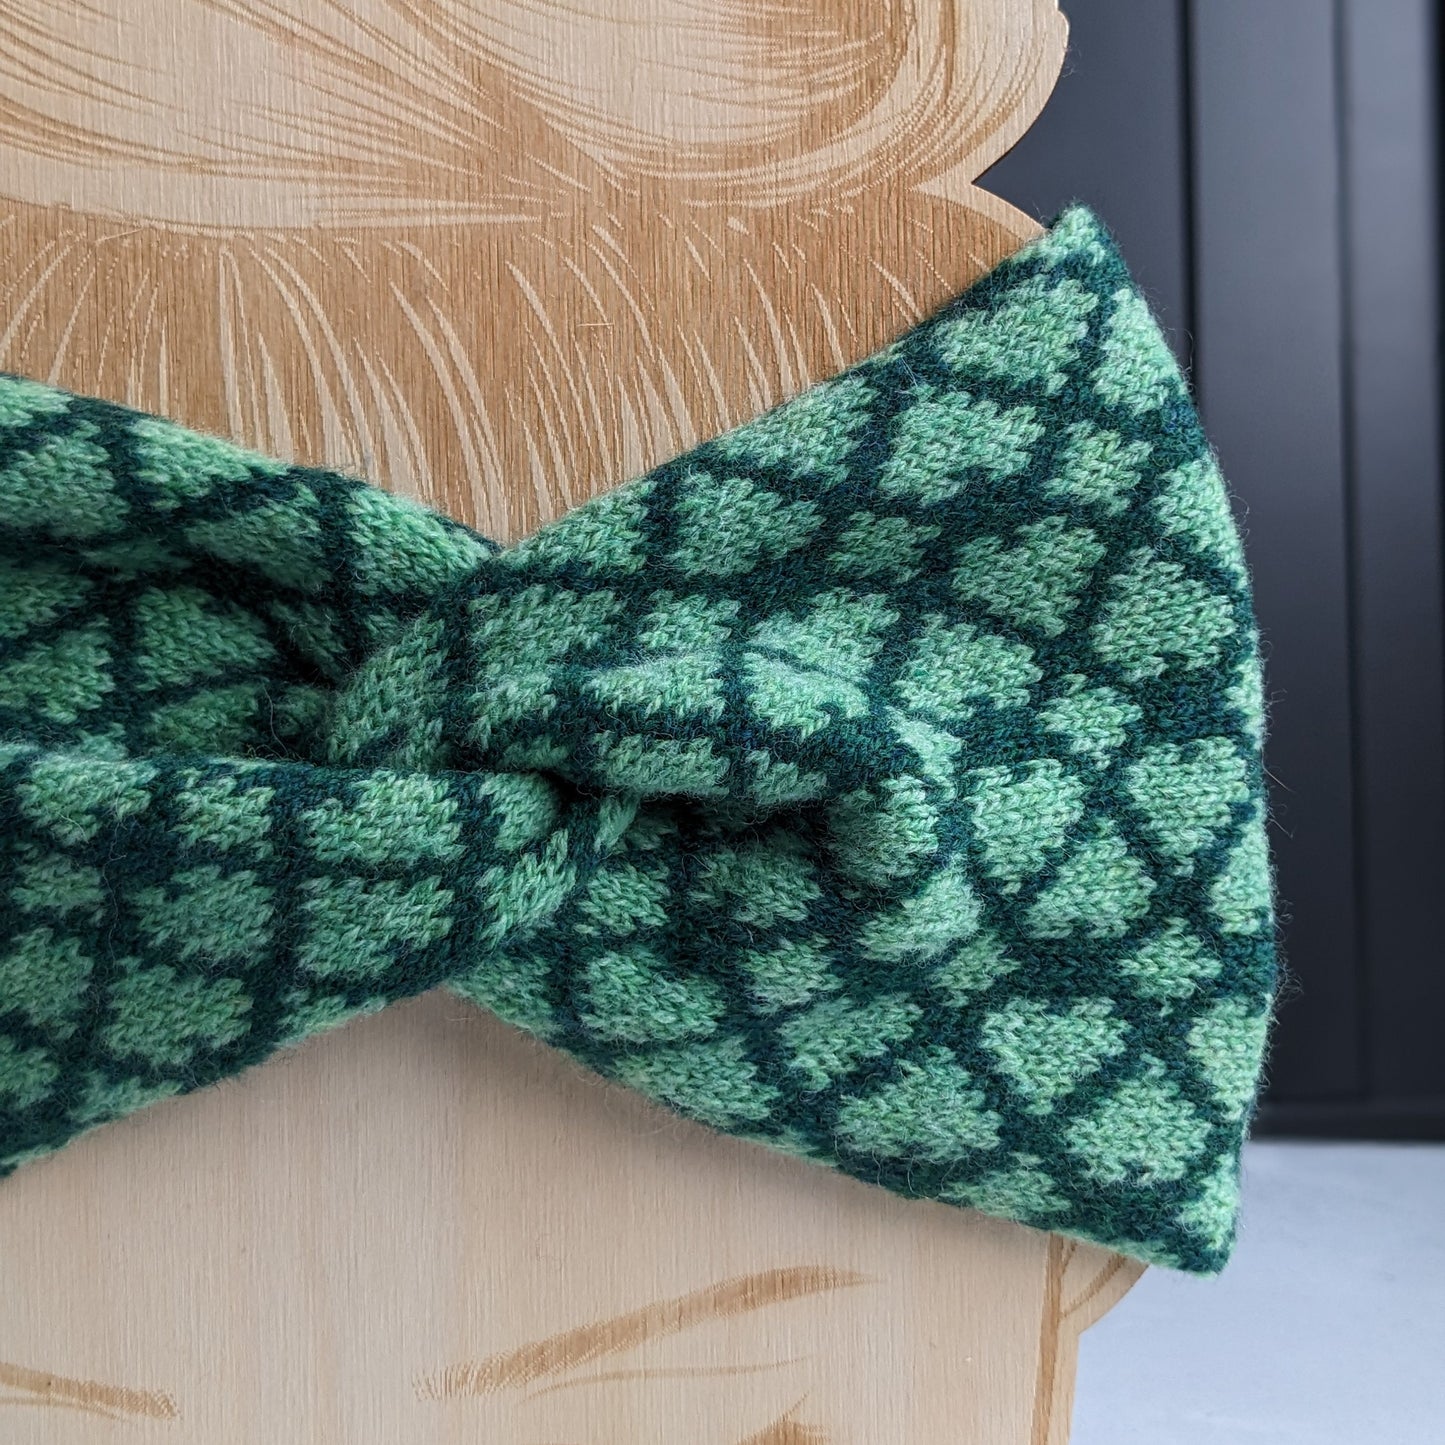 Merino wool ear warmer knitted headband two tone green heart design